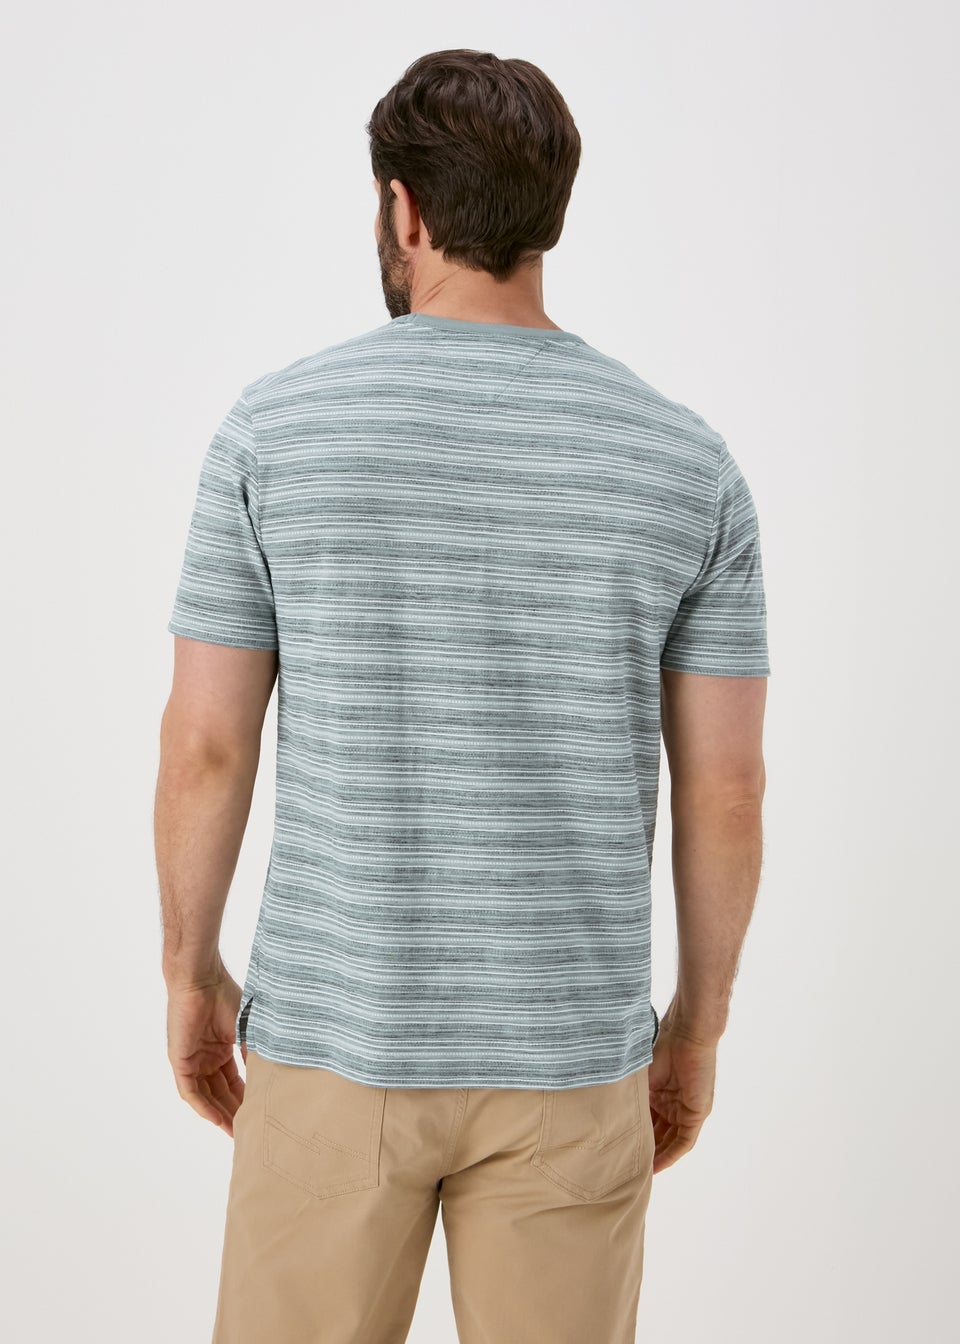 Lincoln Mint Stripe T-Shirt